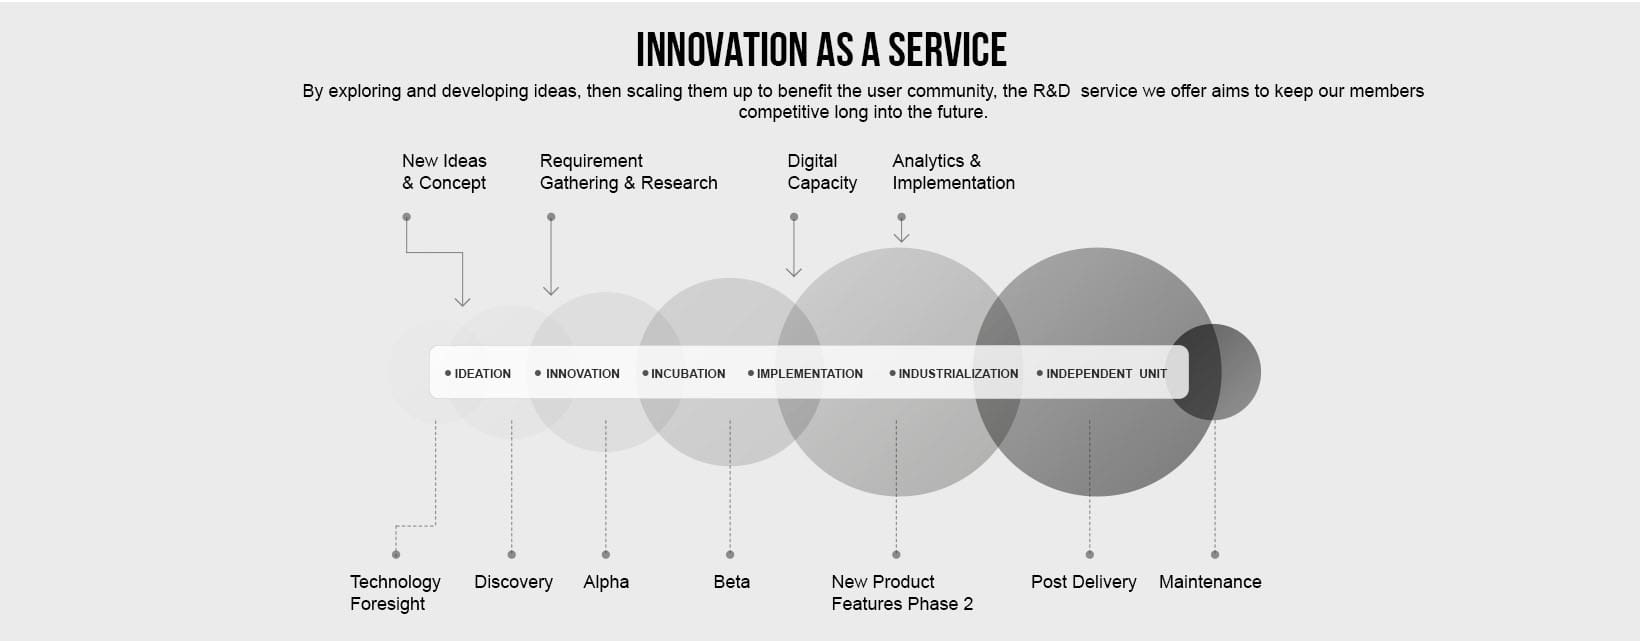 Innovation as a Service